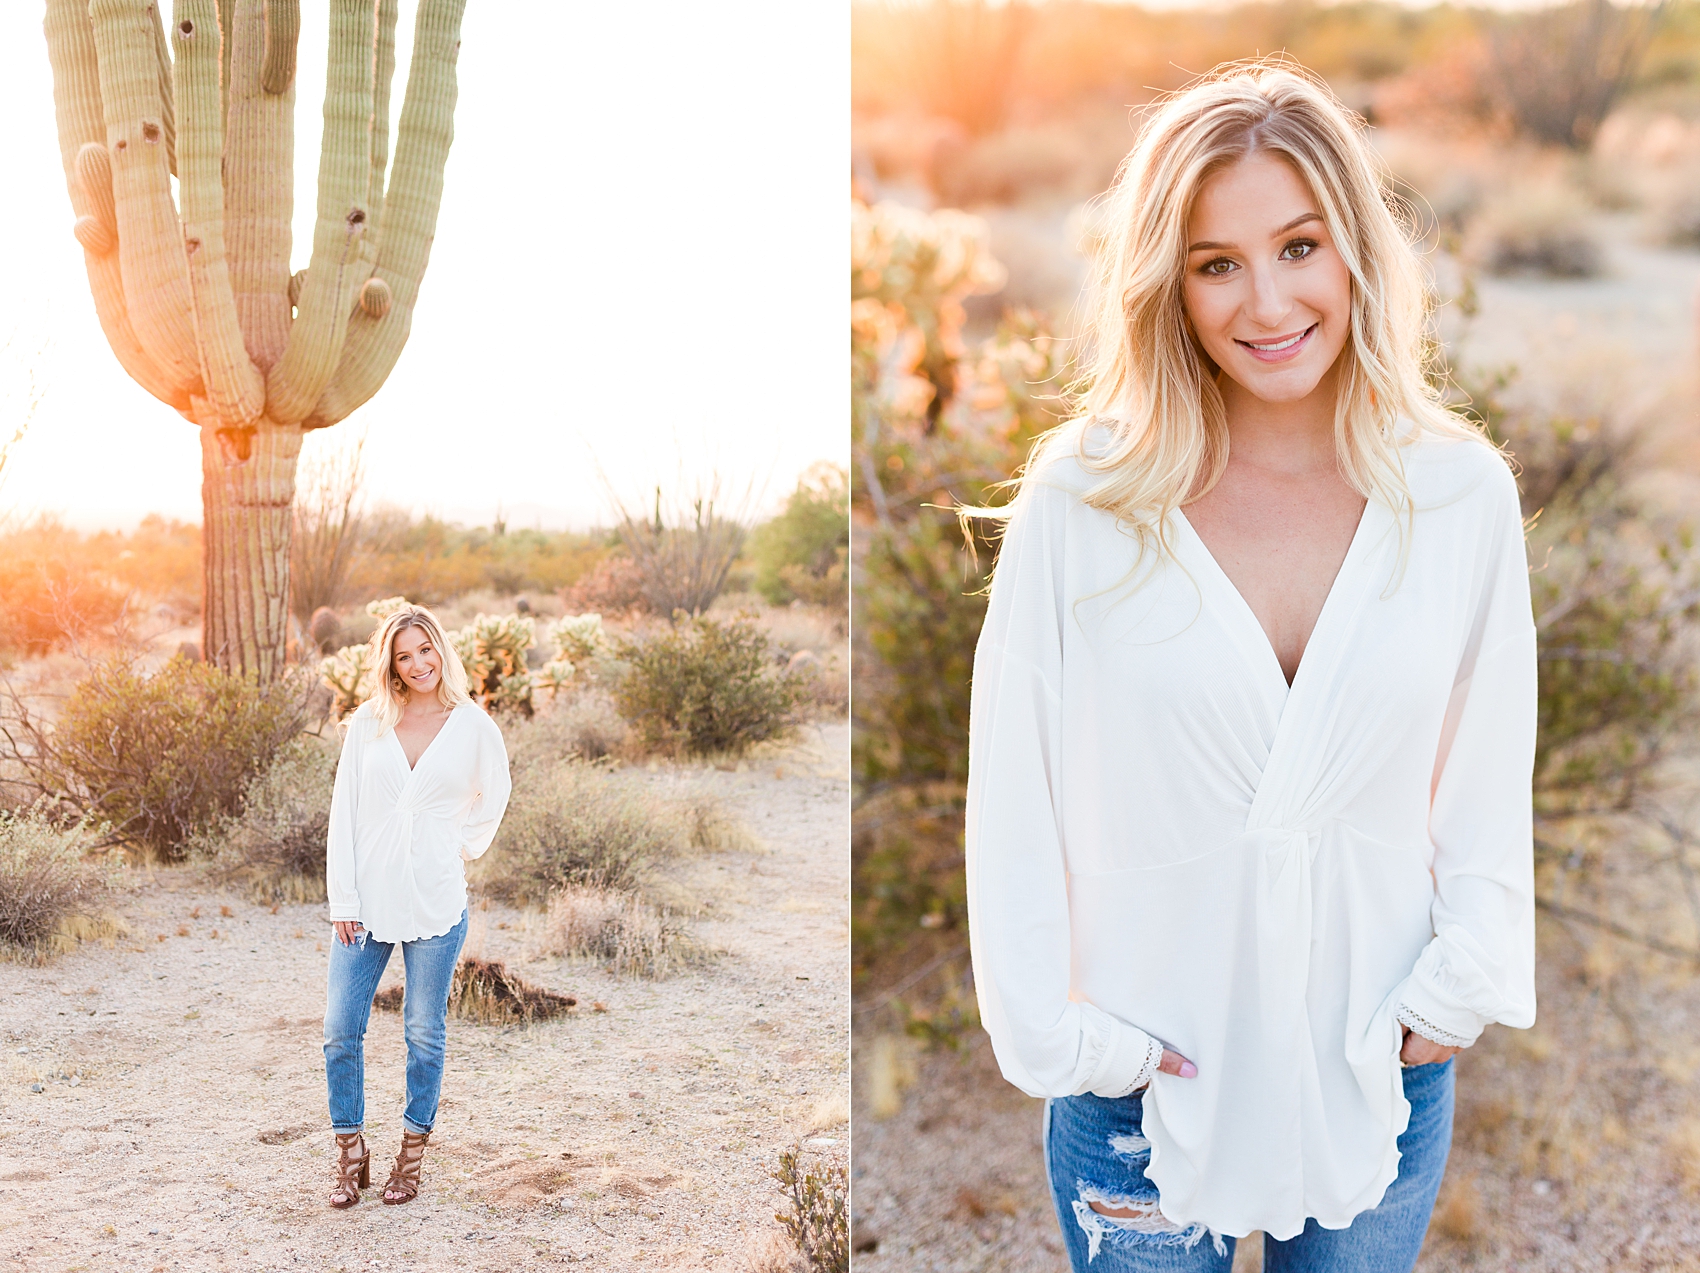 Leah Hope Photography | Scottsdale Phoenix Arizona | Desert Landscape Cactus Saguaro Scenery | Sunset Golden Hour Light | College Senior Pictures | Graduation Photos | Cap and Gown | What to Wear | Senior Girl | Senior Poses